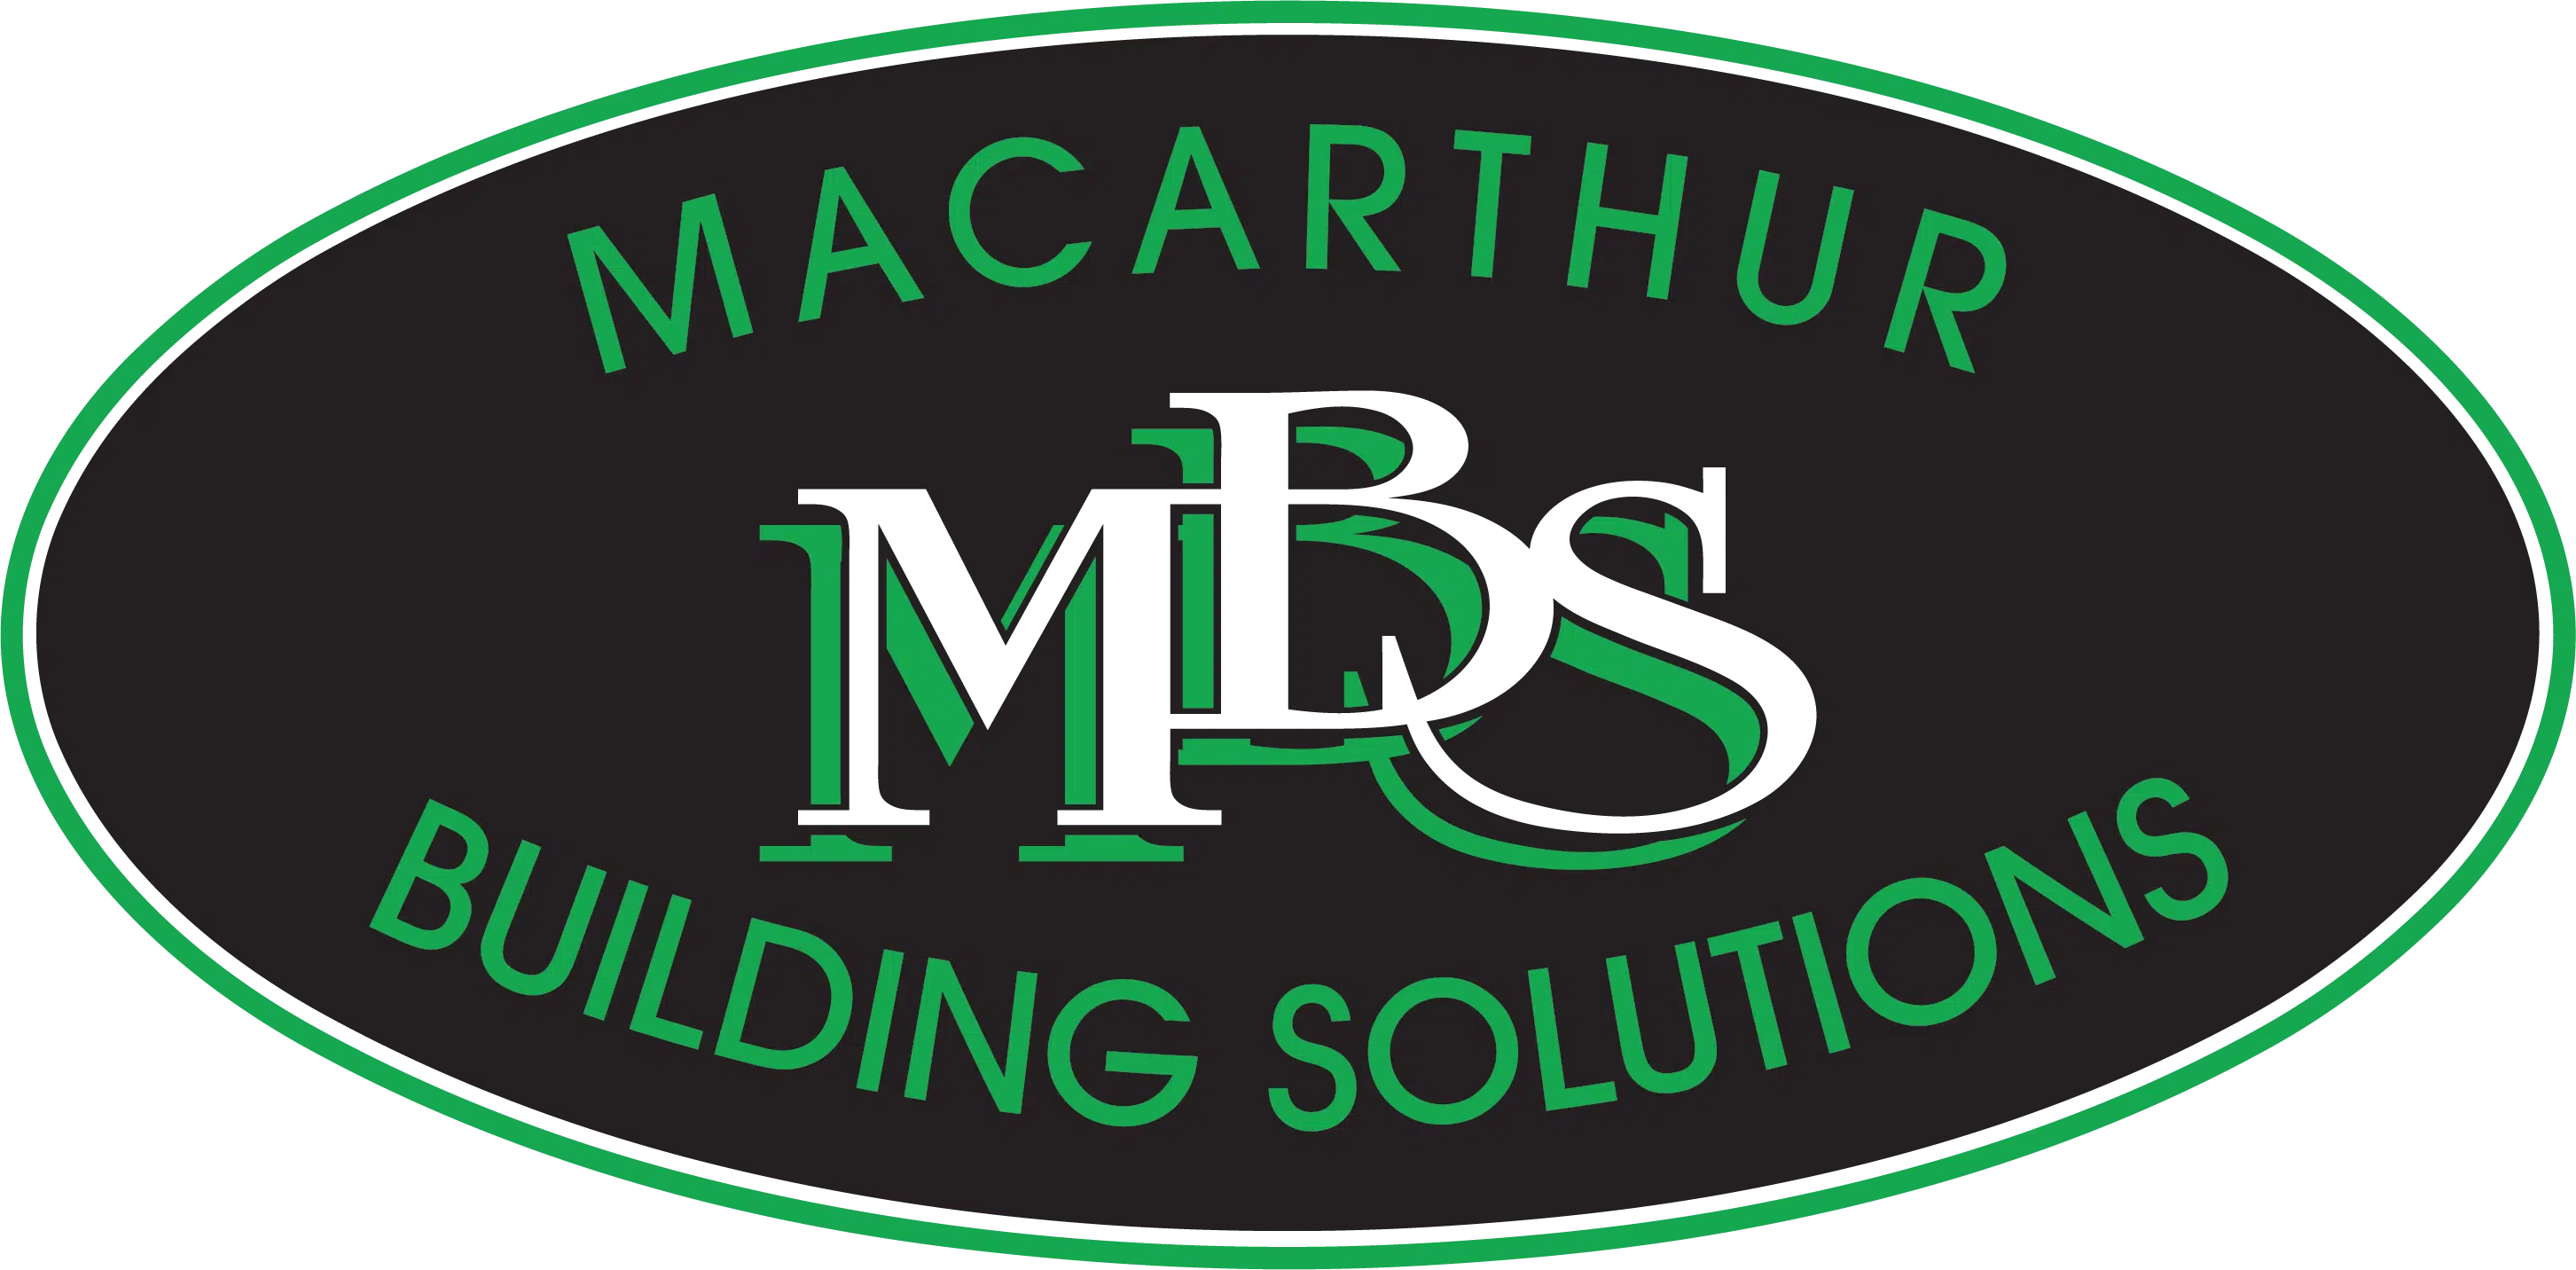 Macarthur Building Solutions